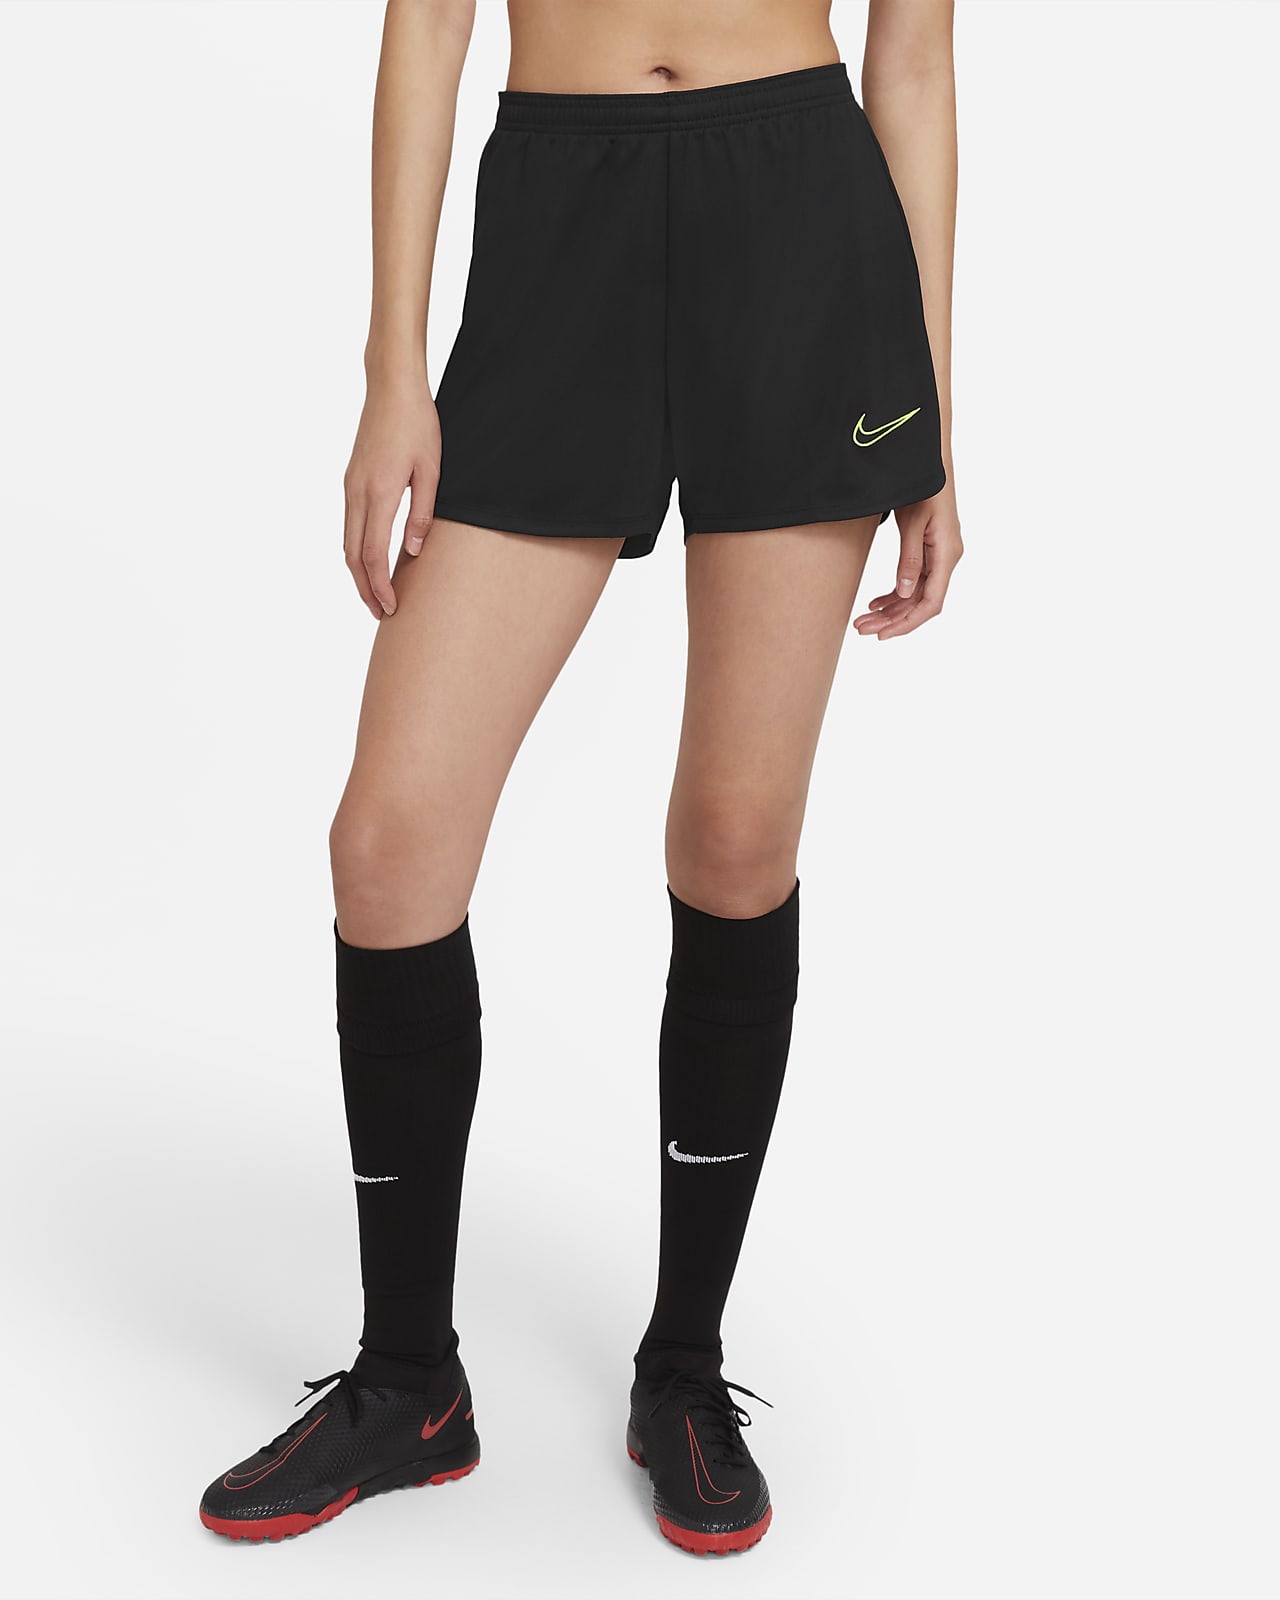 nike womens football shorts